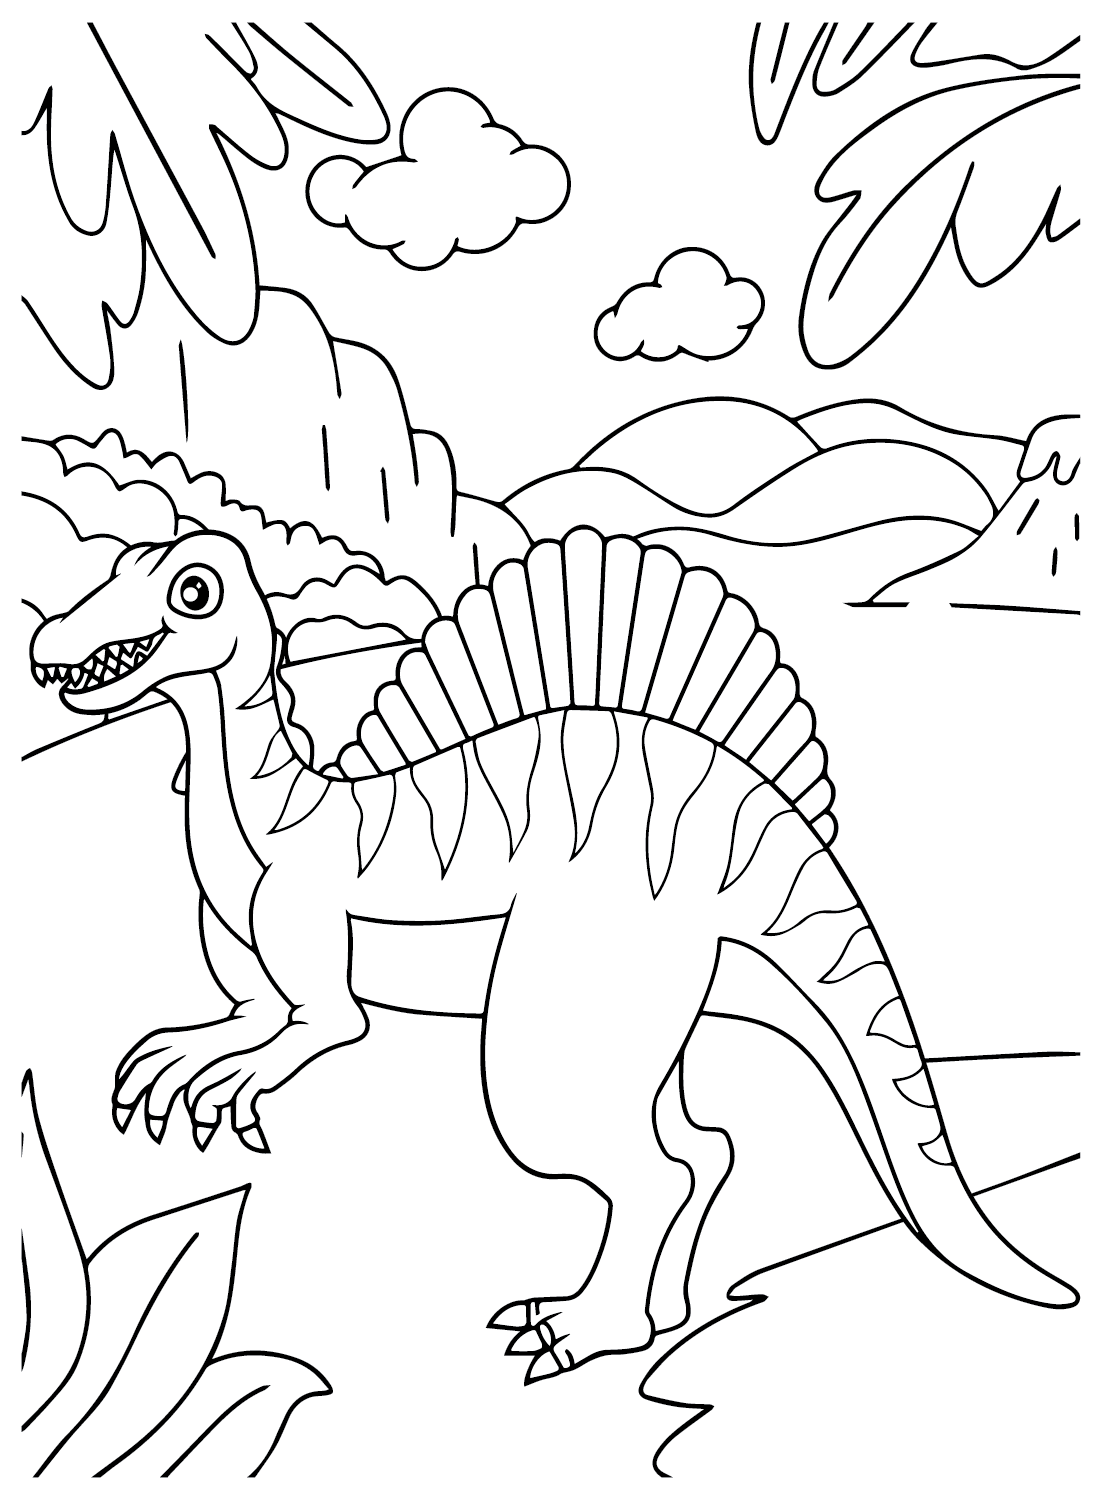 Spinosaurus Aegyptiacus kleurplaat voor kinderen van Spinosaurus Aegyptiacus